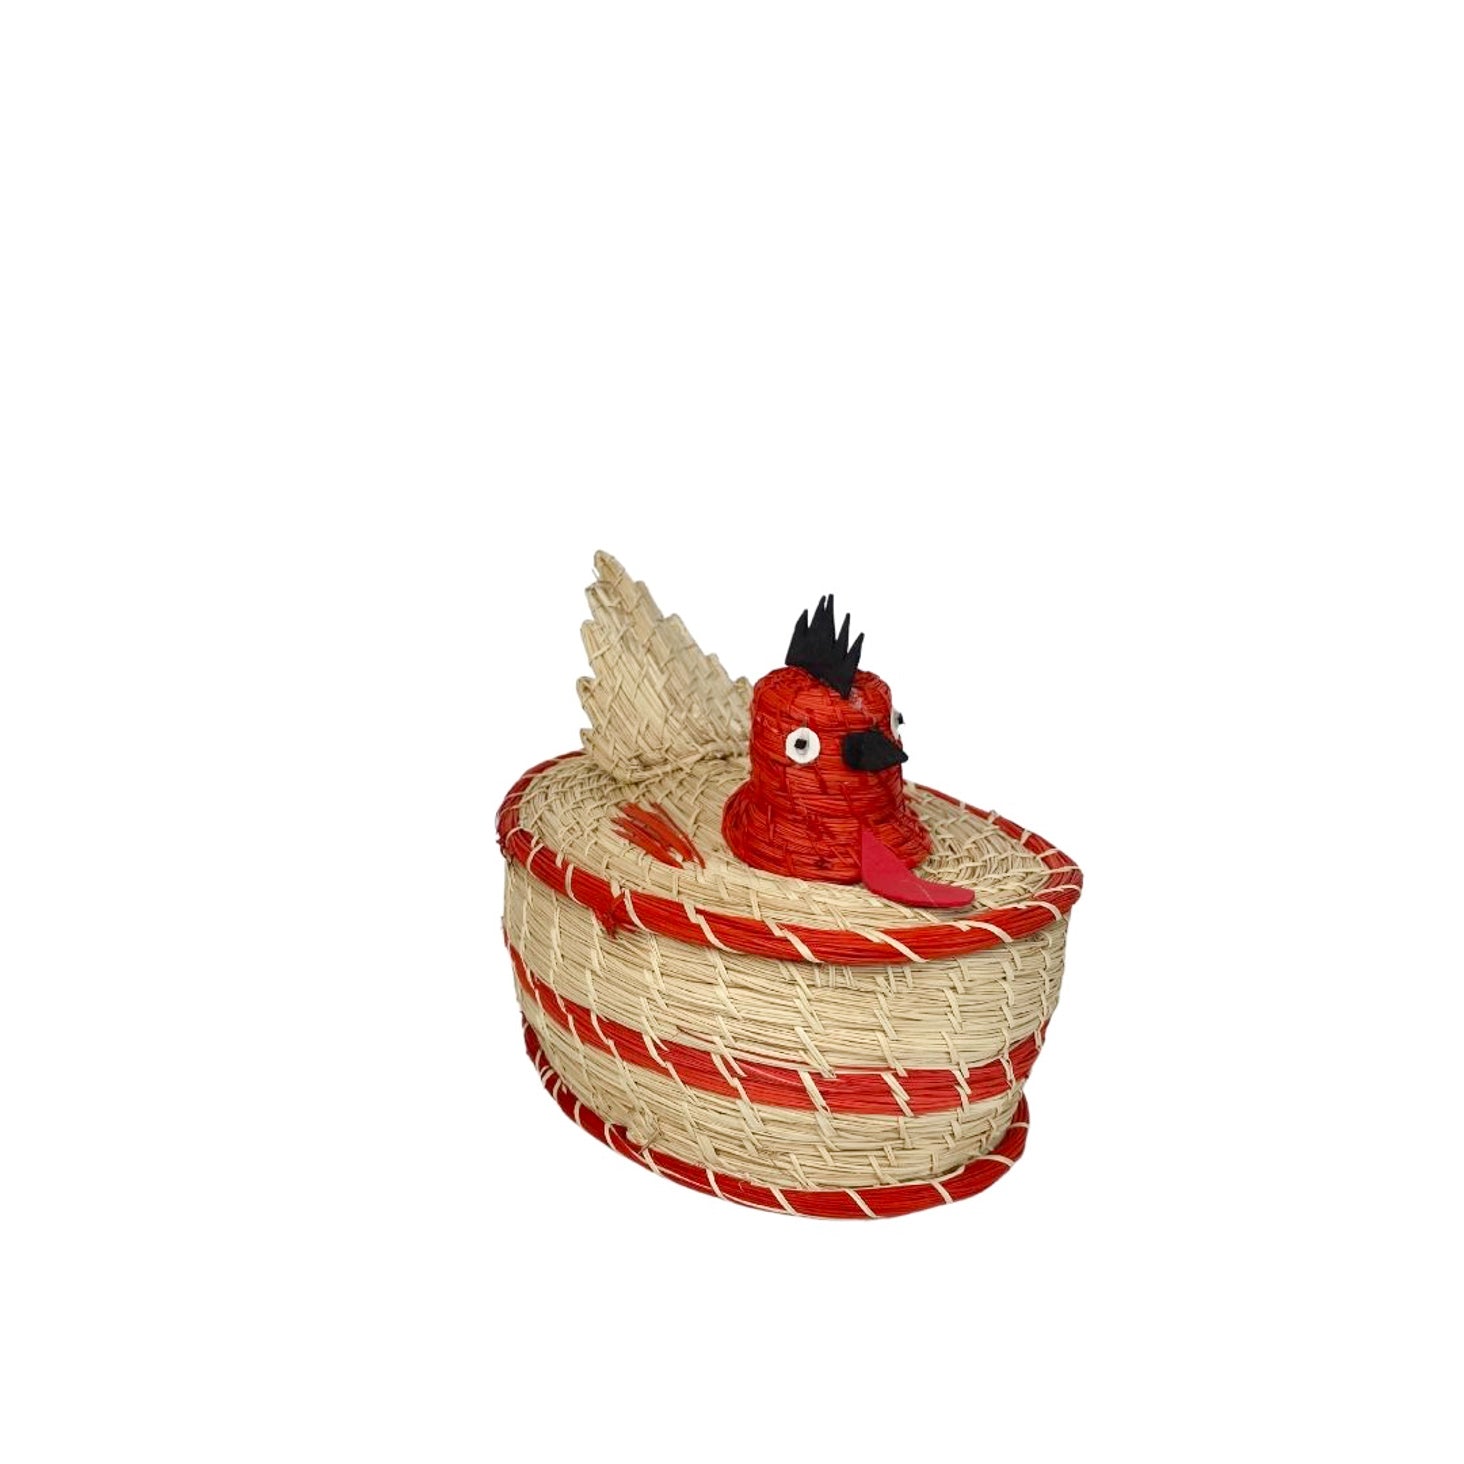 Red Artisanal Chicken holder